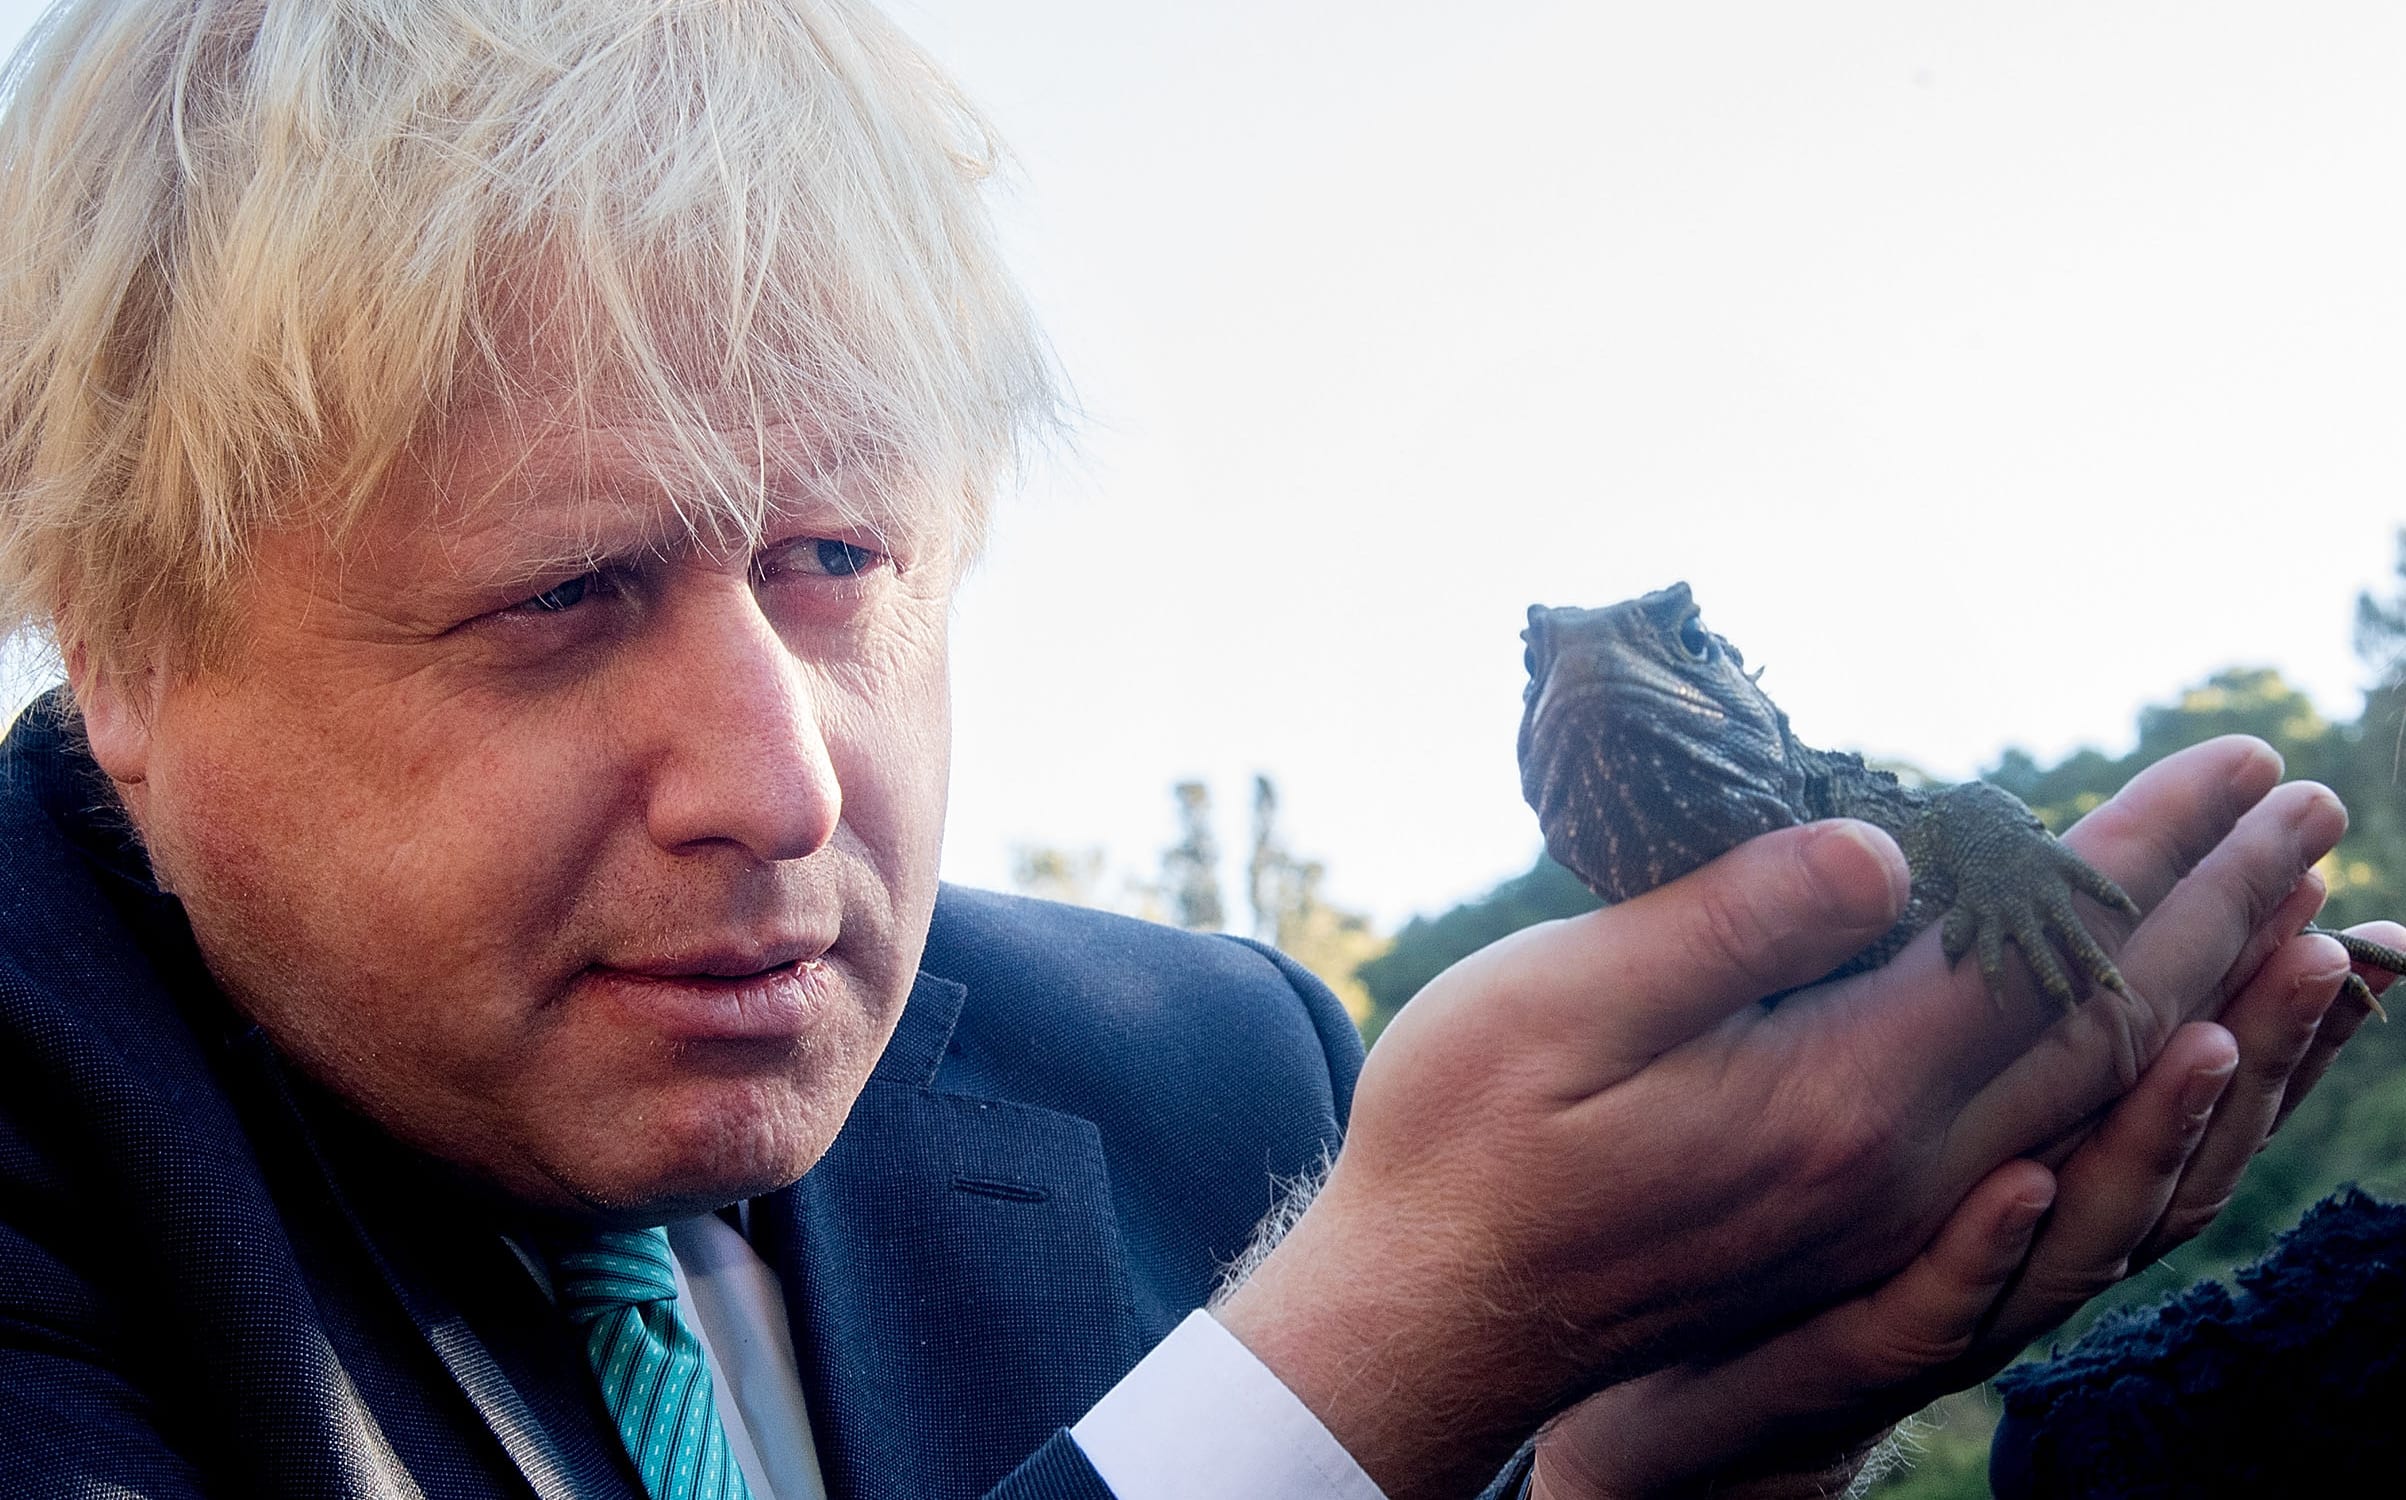 Boris Johnson inspects a tuatara during his visit to Zealandia wildlife sanctuary.